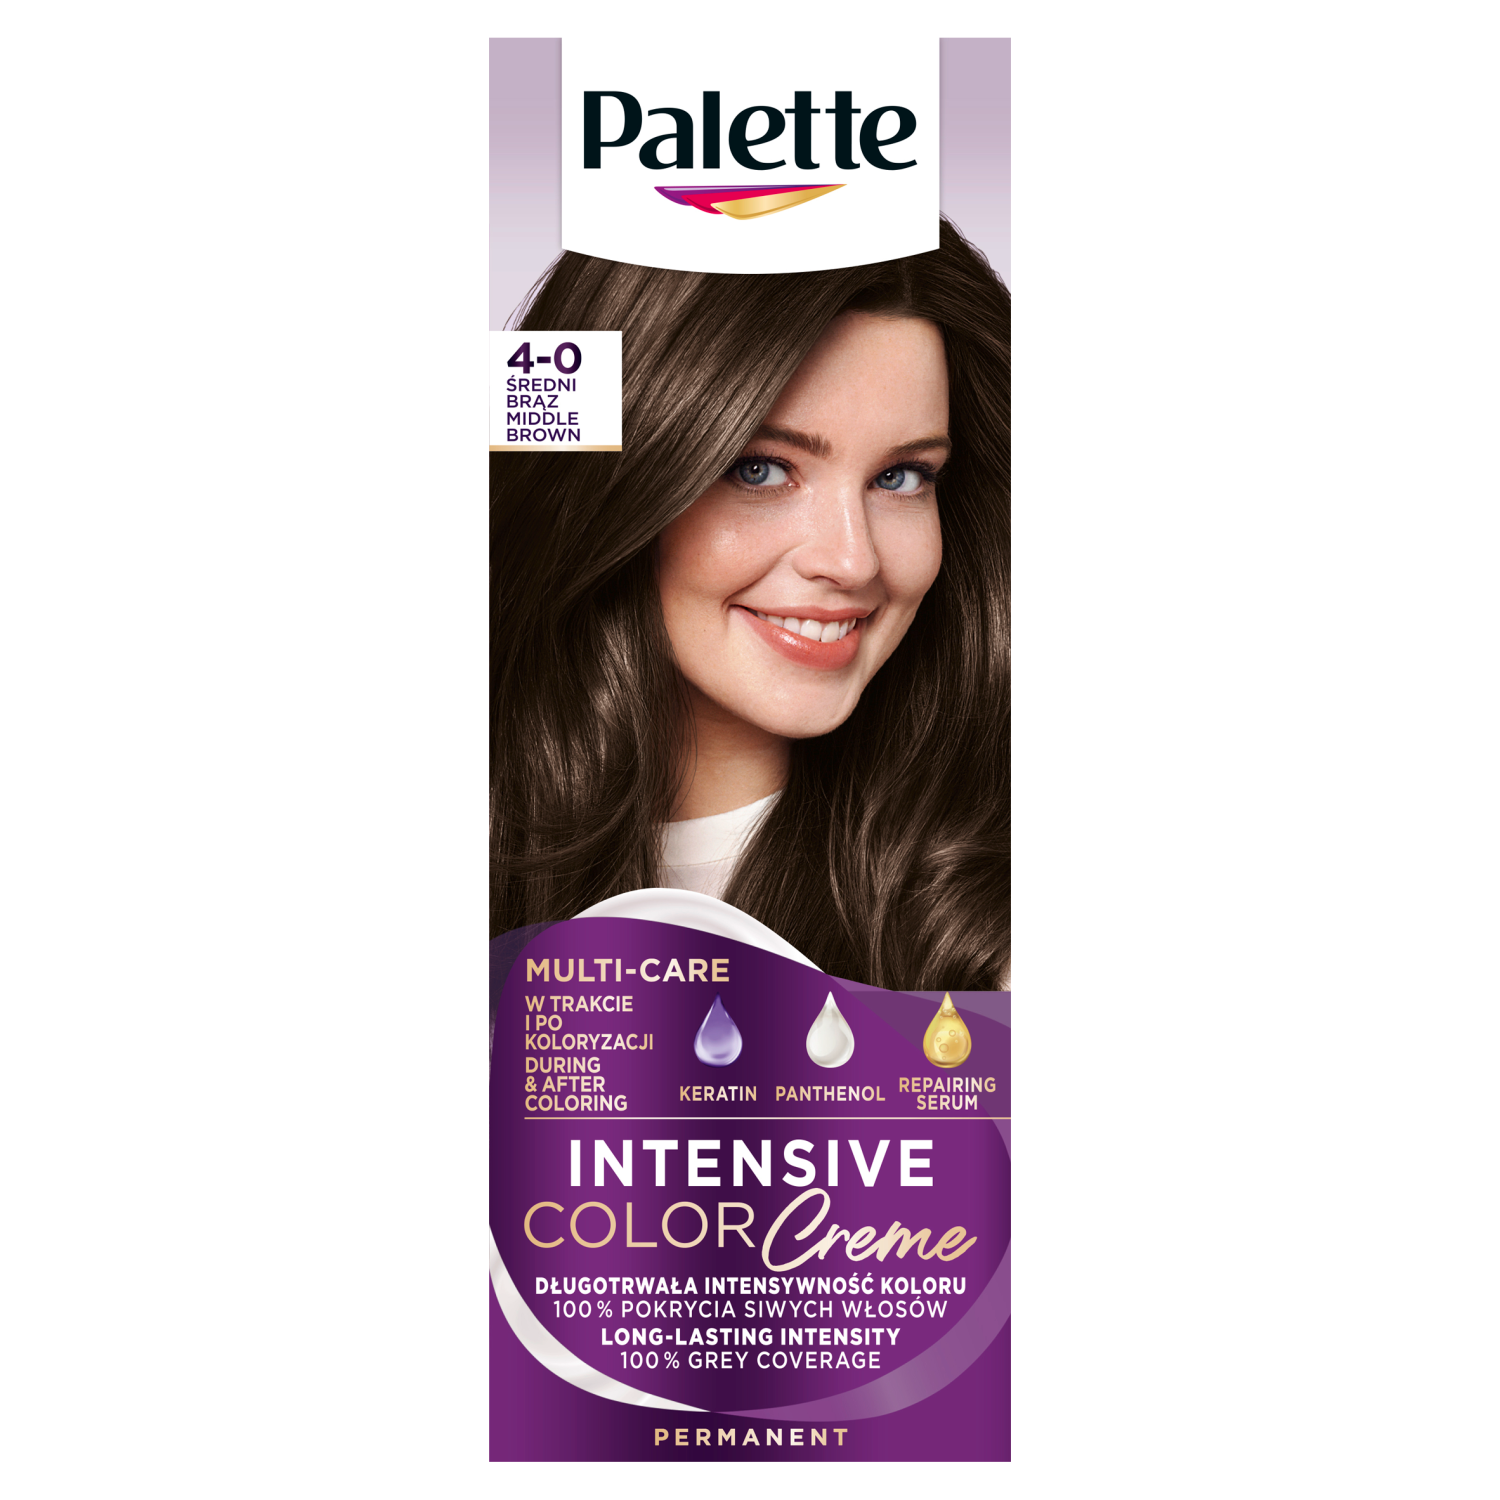 Palette Intensive Color Creme краска крем-краска для волос 4-0 (n3) средний русый, 1 упаковка